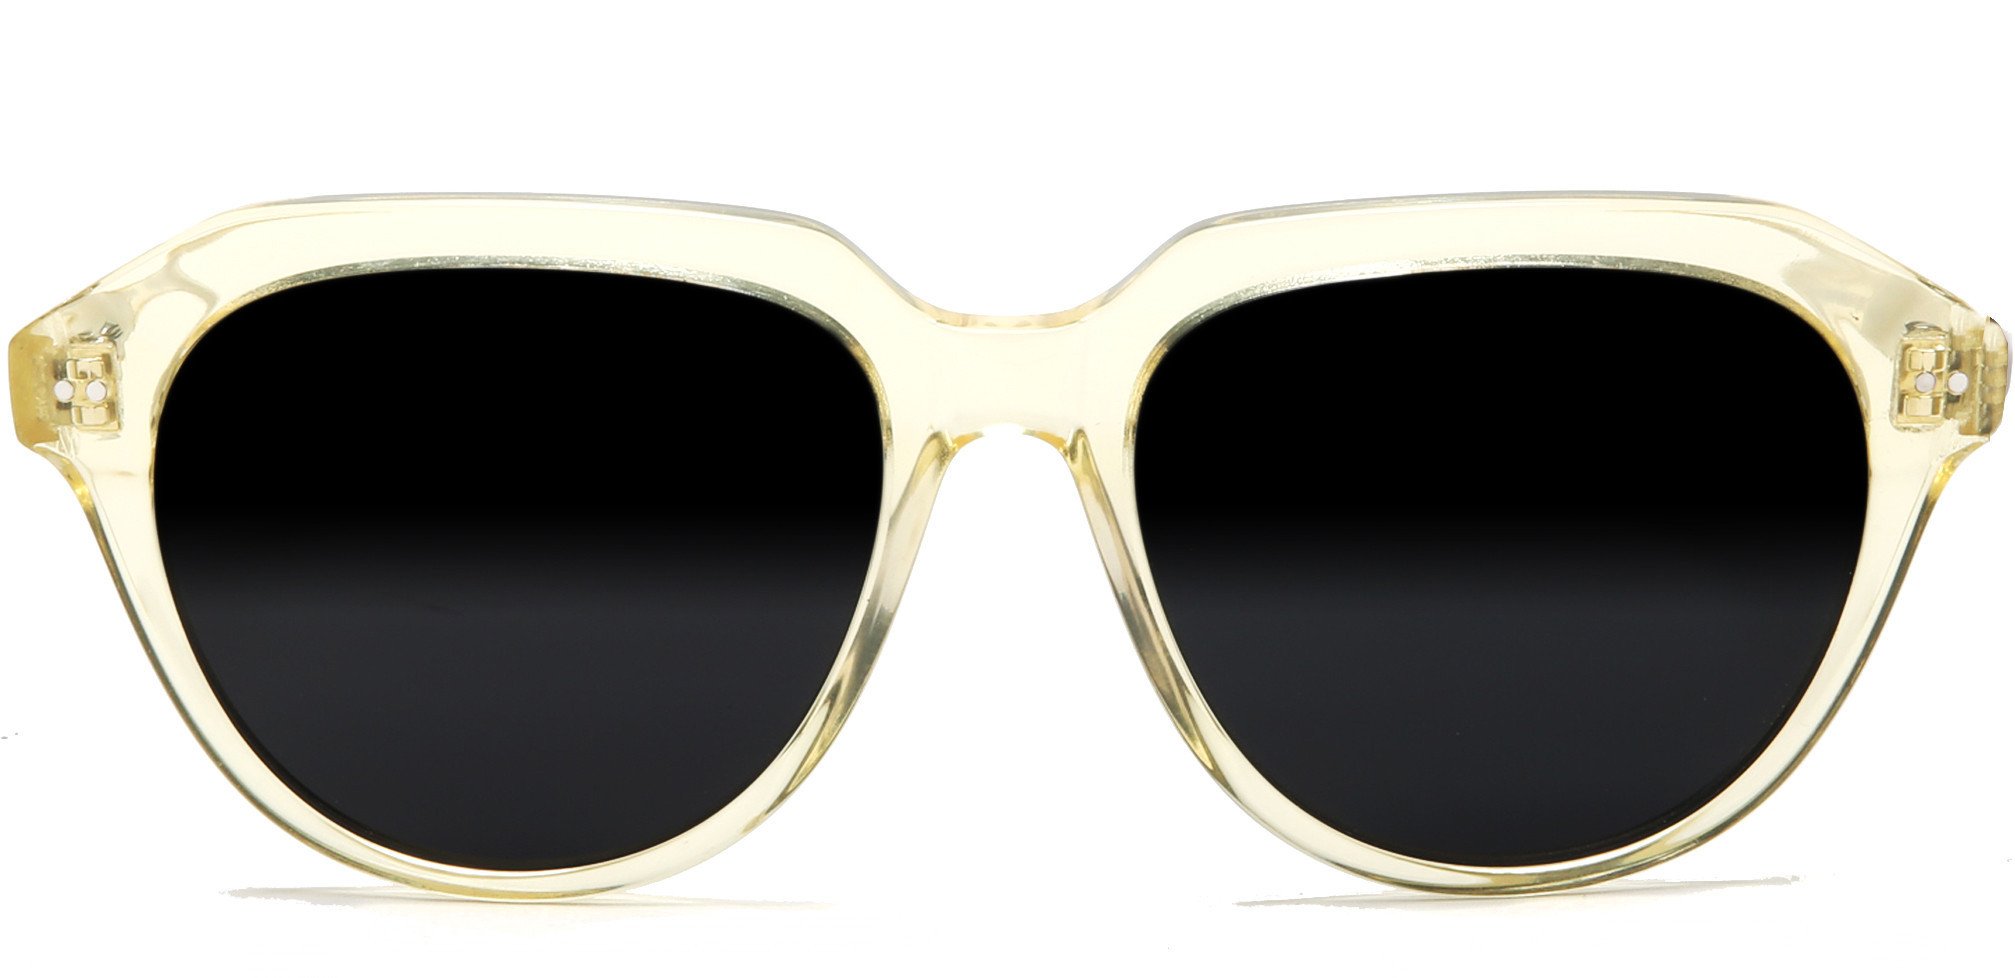 Ray-Ban Jackie Ohh II Sunglasses